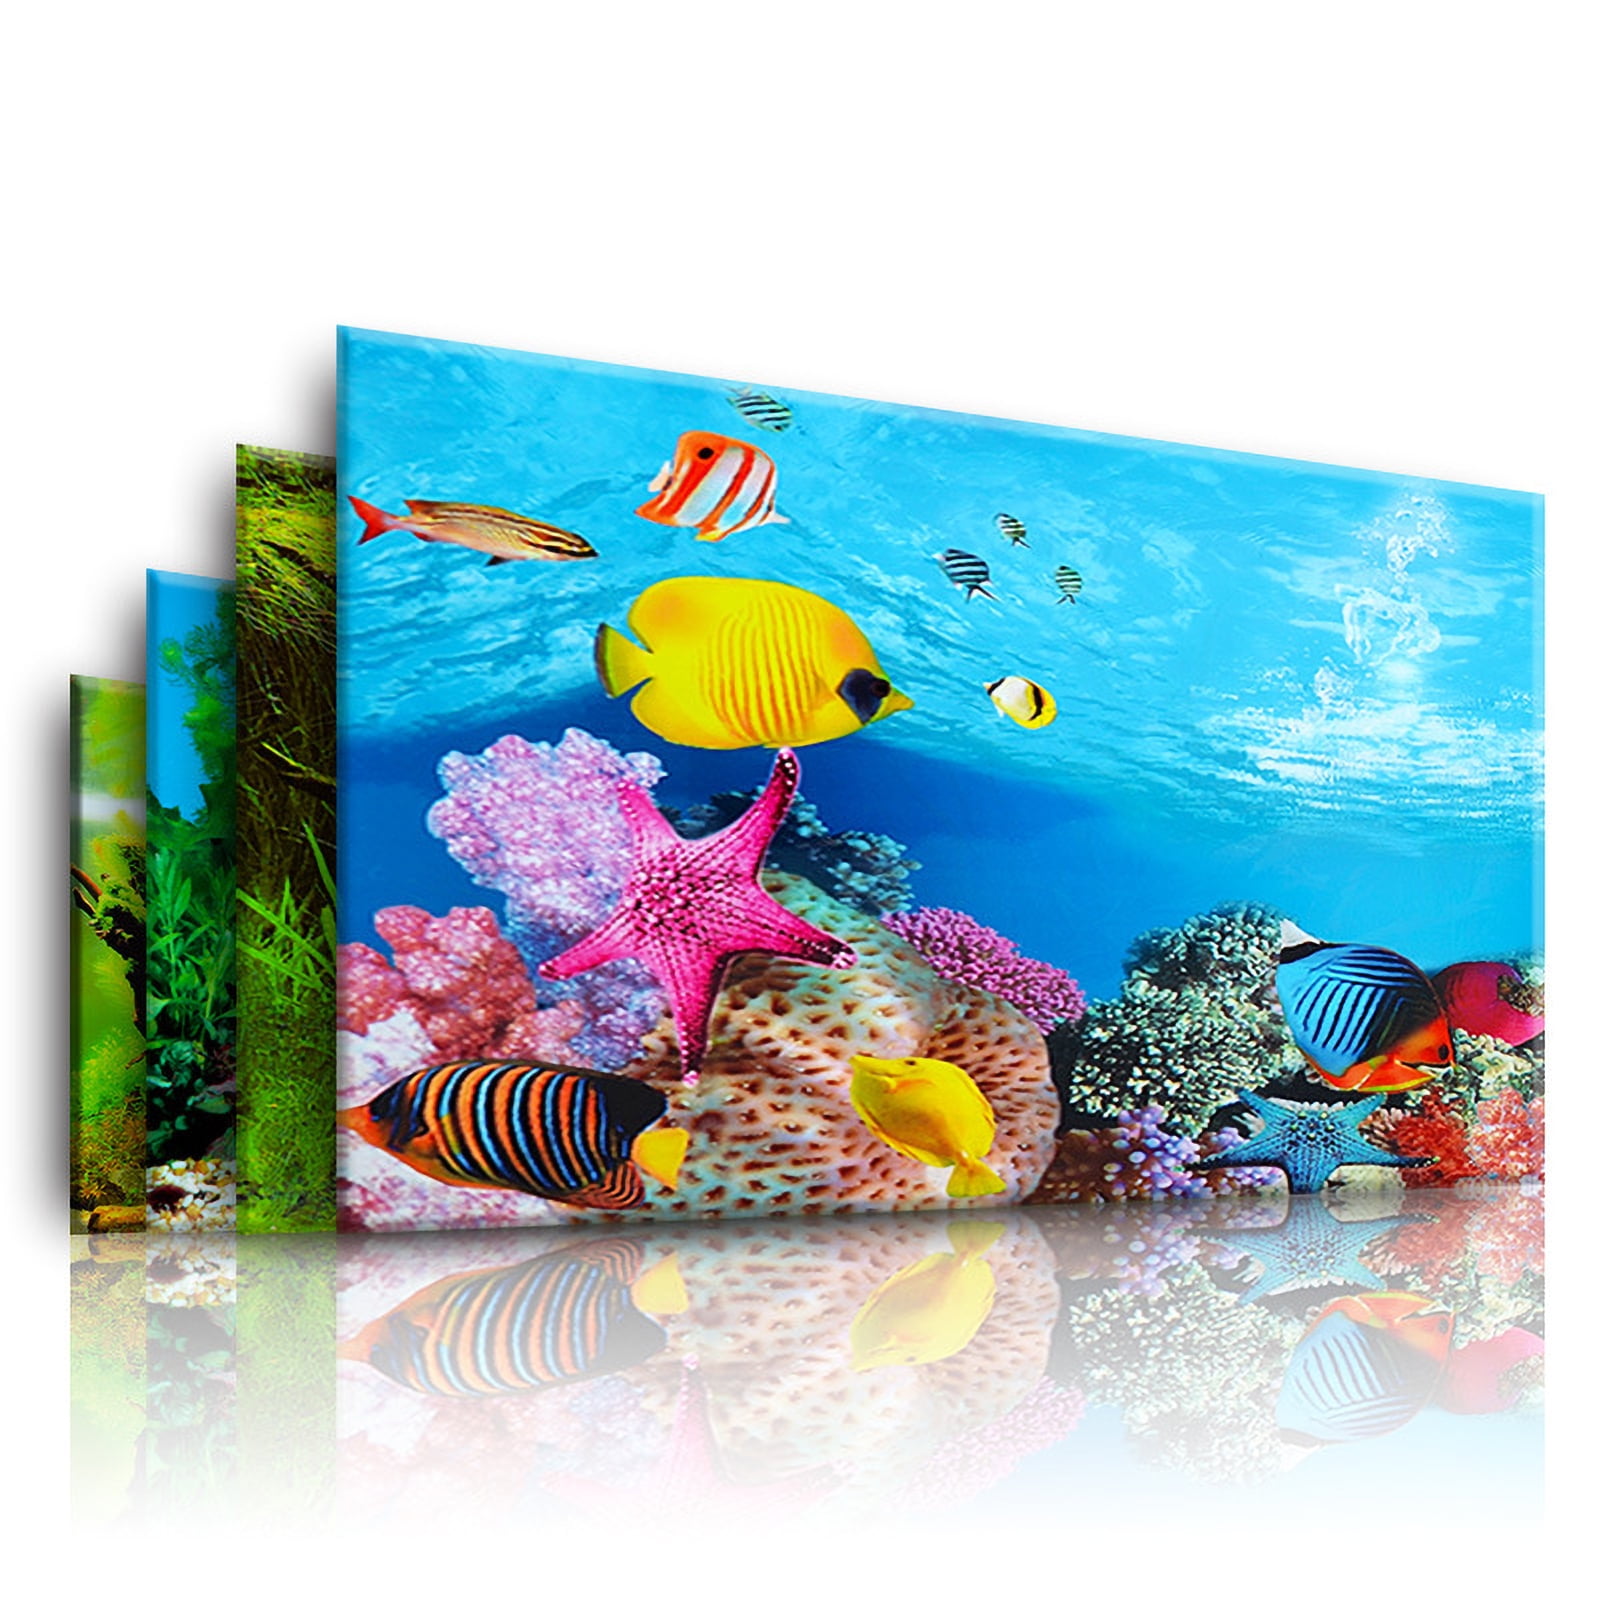 Ludlz Aquarium Background Sticker,3D Double-Sided Adhesive